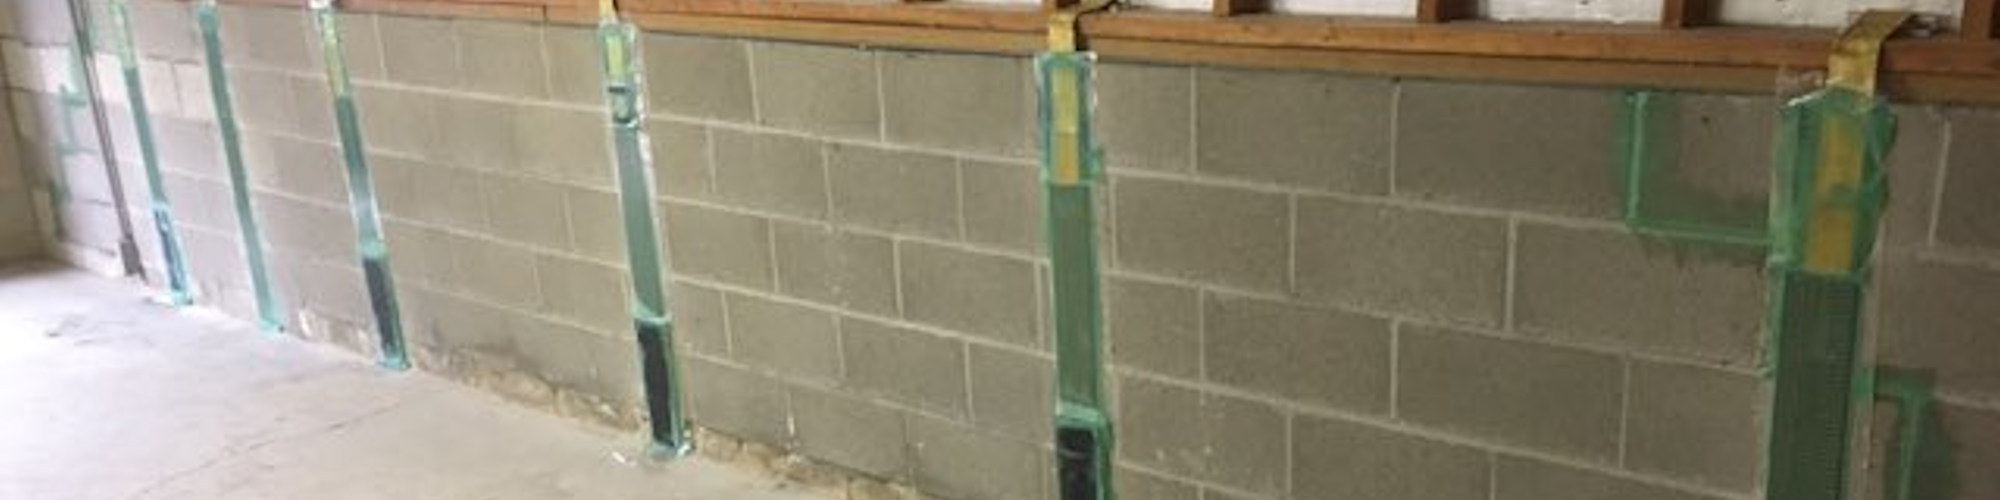 Foundation Stabilization, Concrete repair and Restoration, Power Wash and Sealing, Basement Moisture Prevention